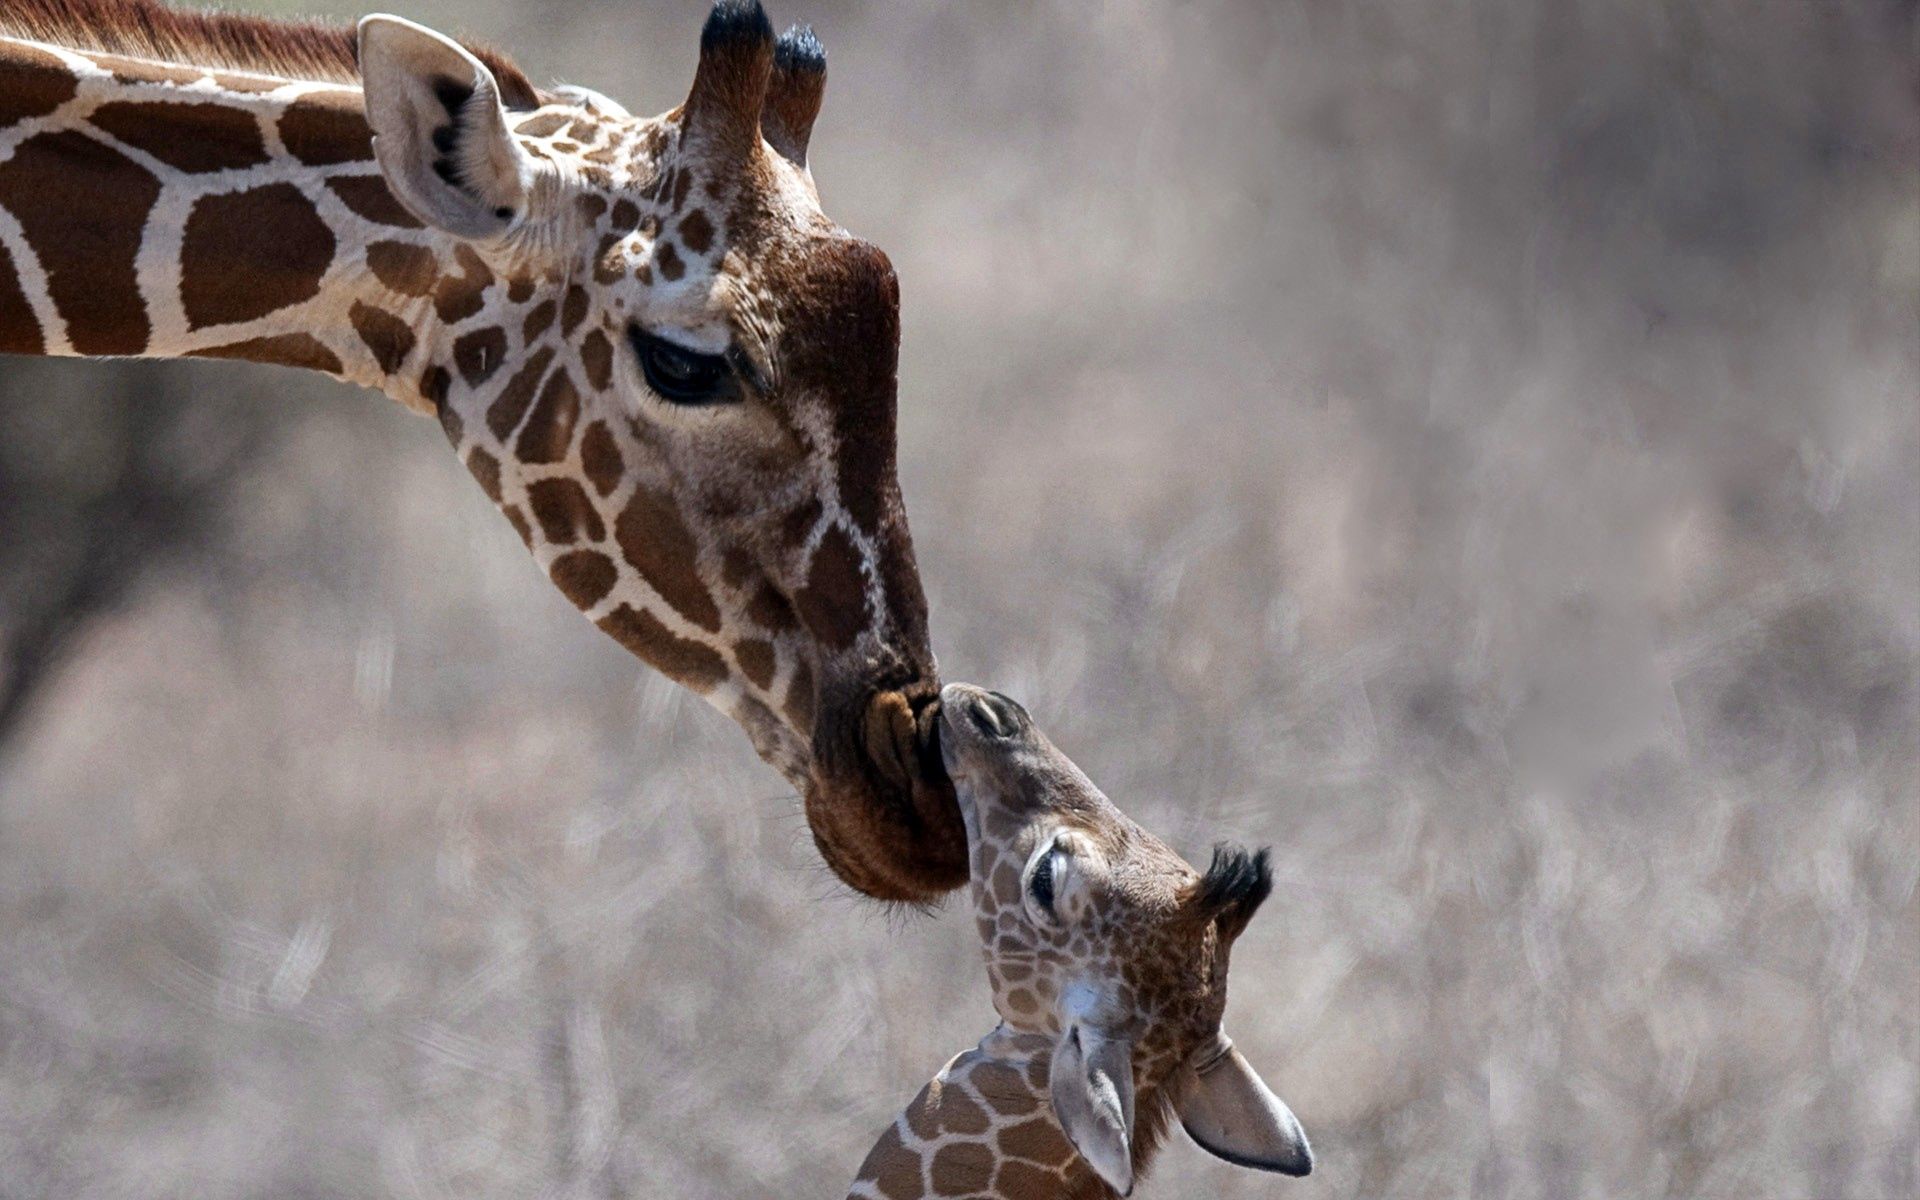 care, animals, young, head, joey, giraffe